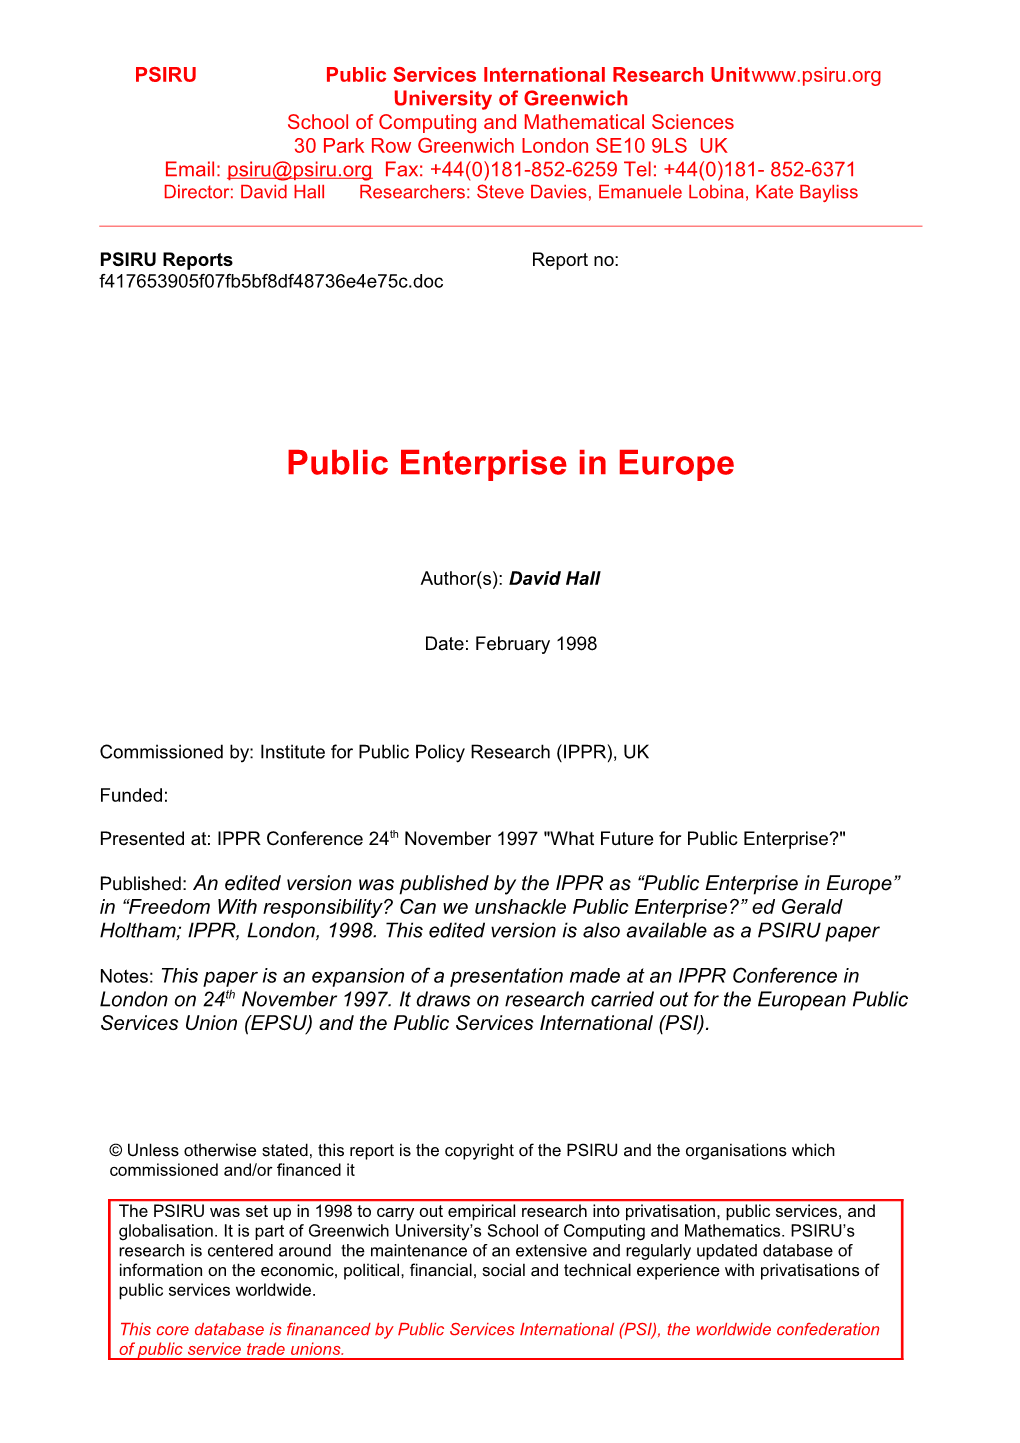 Public Enterprise in Europe